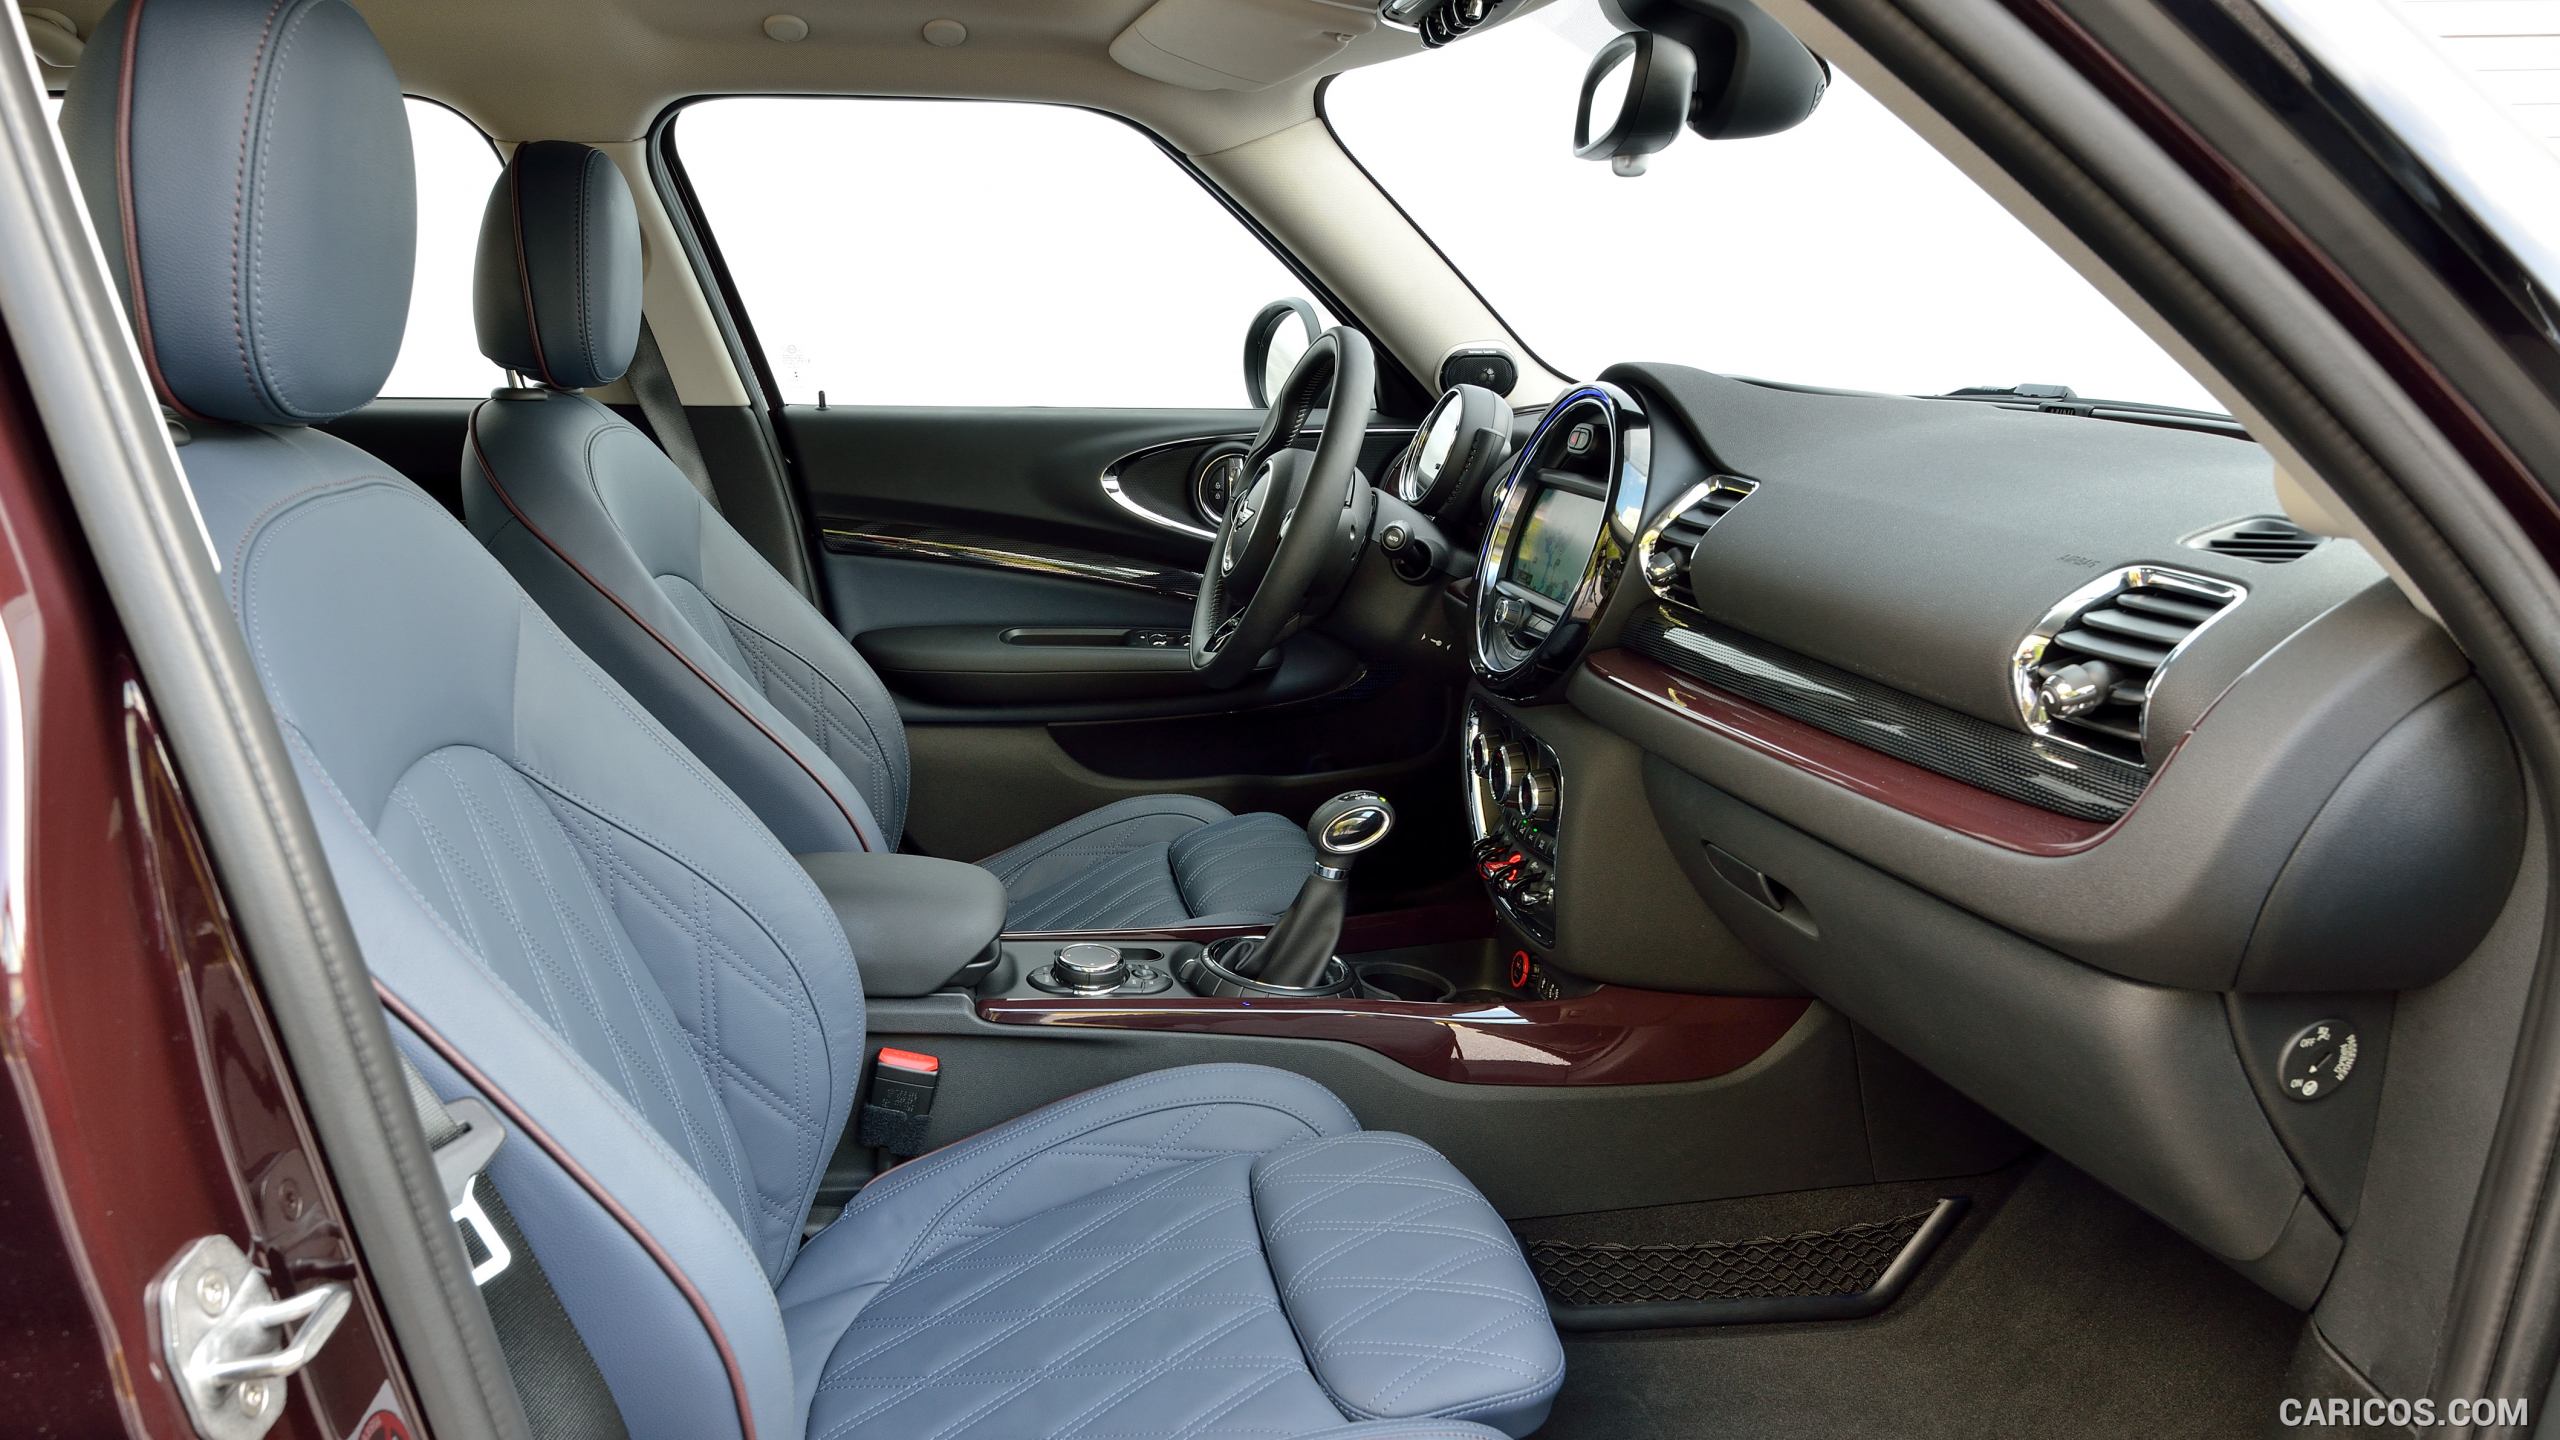 2016 MINI Cooper S Clubman in Metallic Pure Burgundy - Interior, Front Seats, #375 of 380